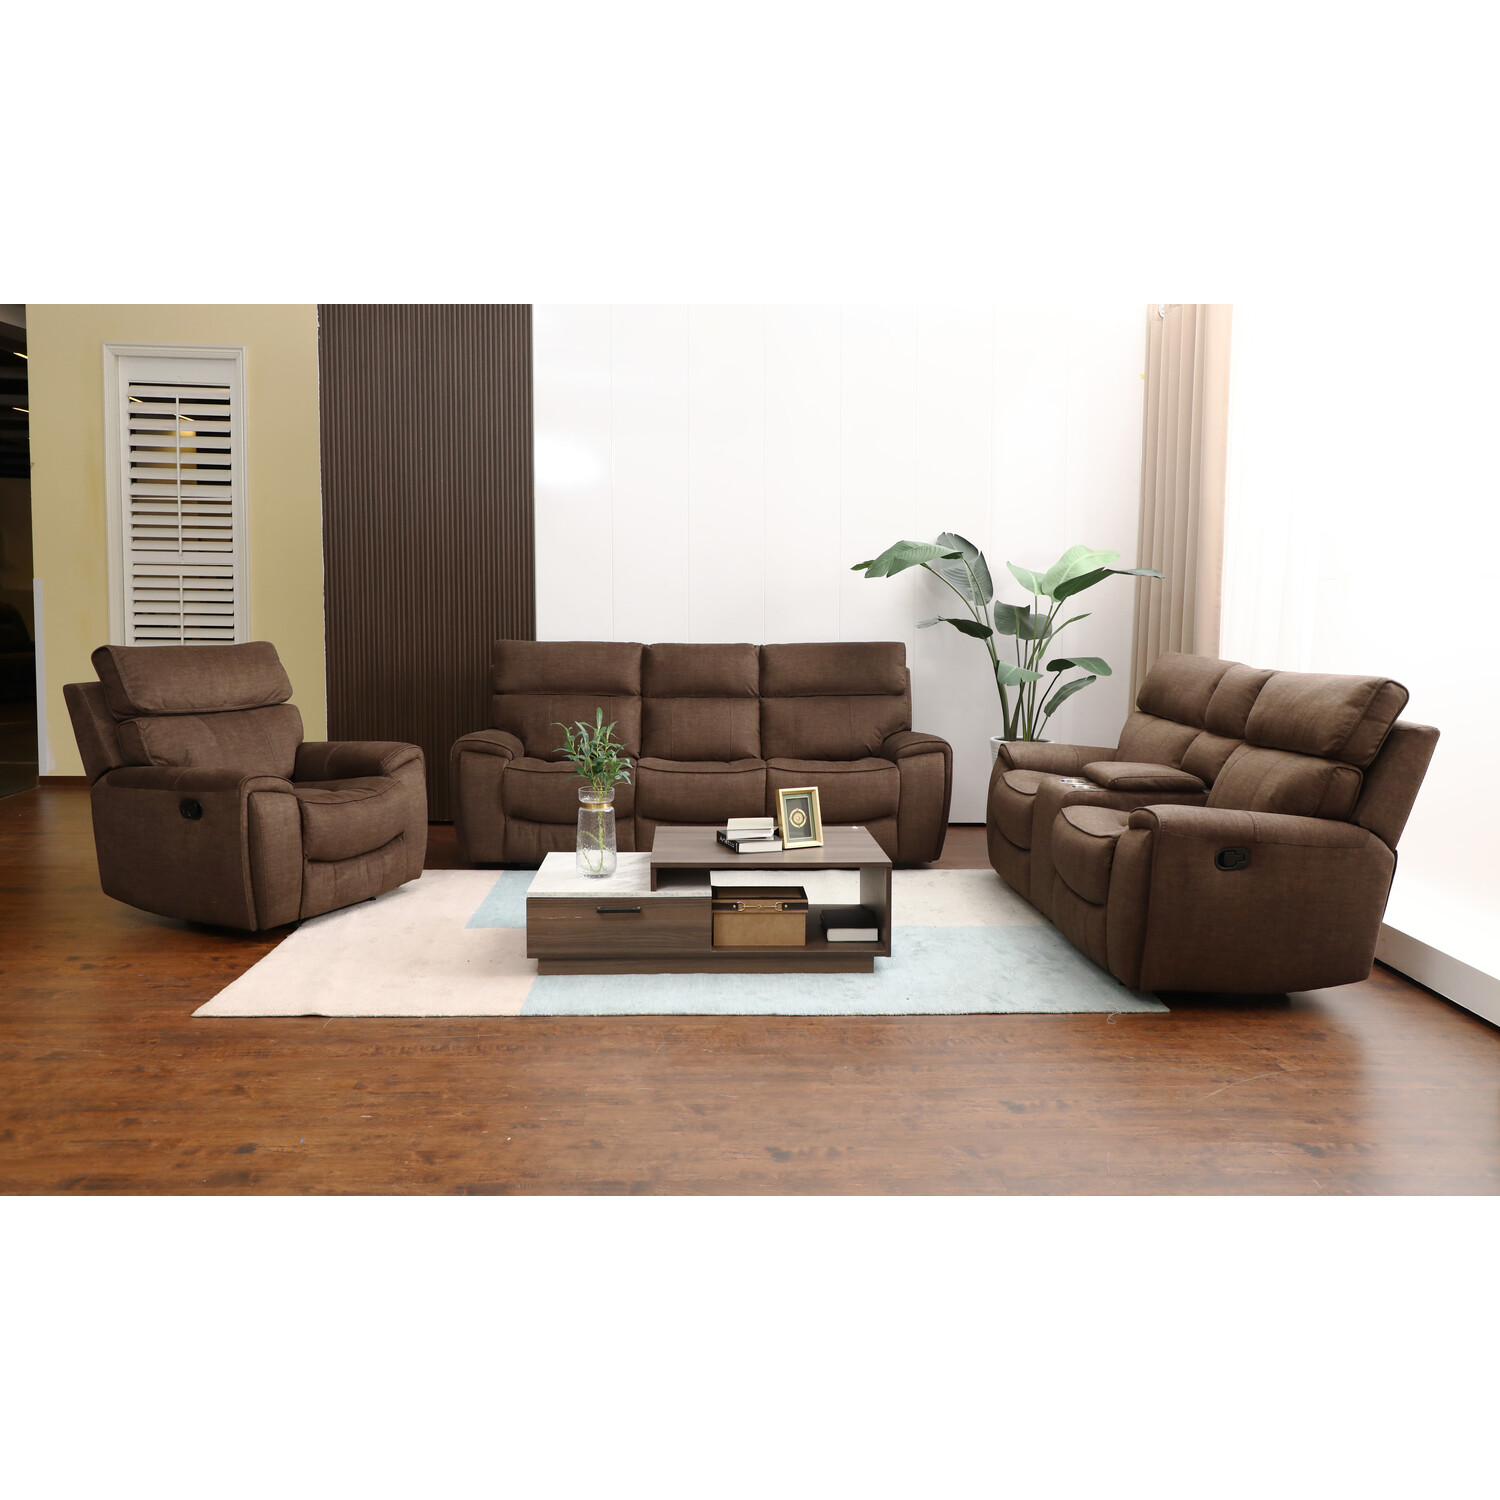 Cancun 3 Seater Brown Reclining Sofa Image 3